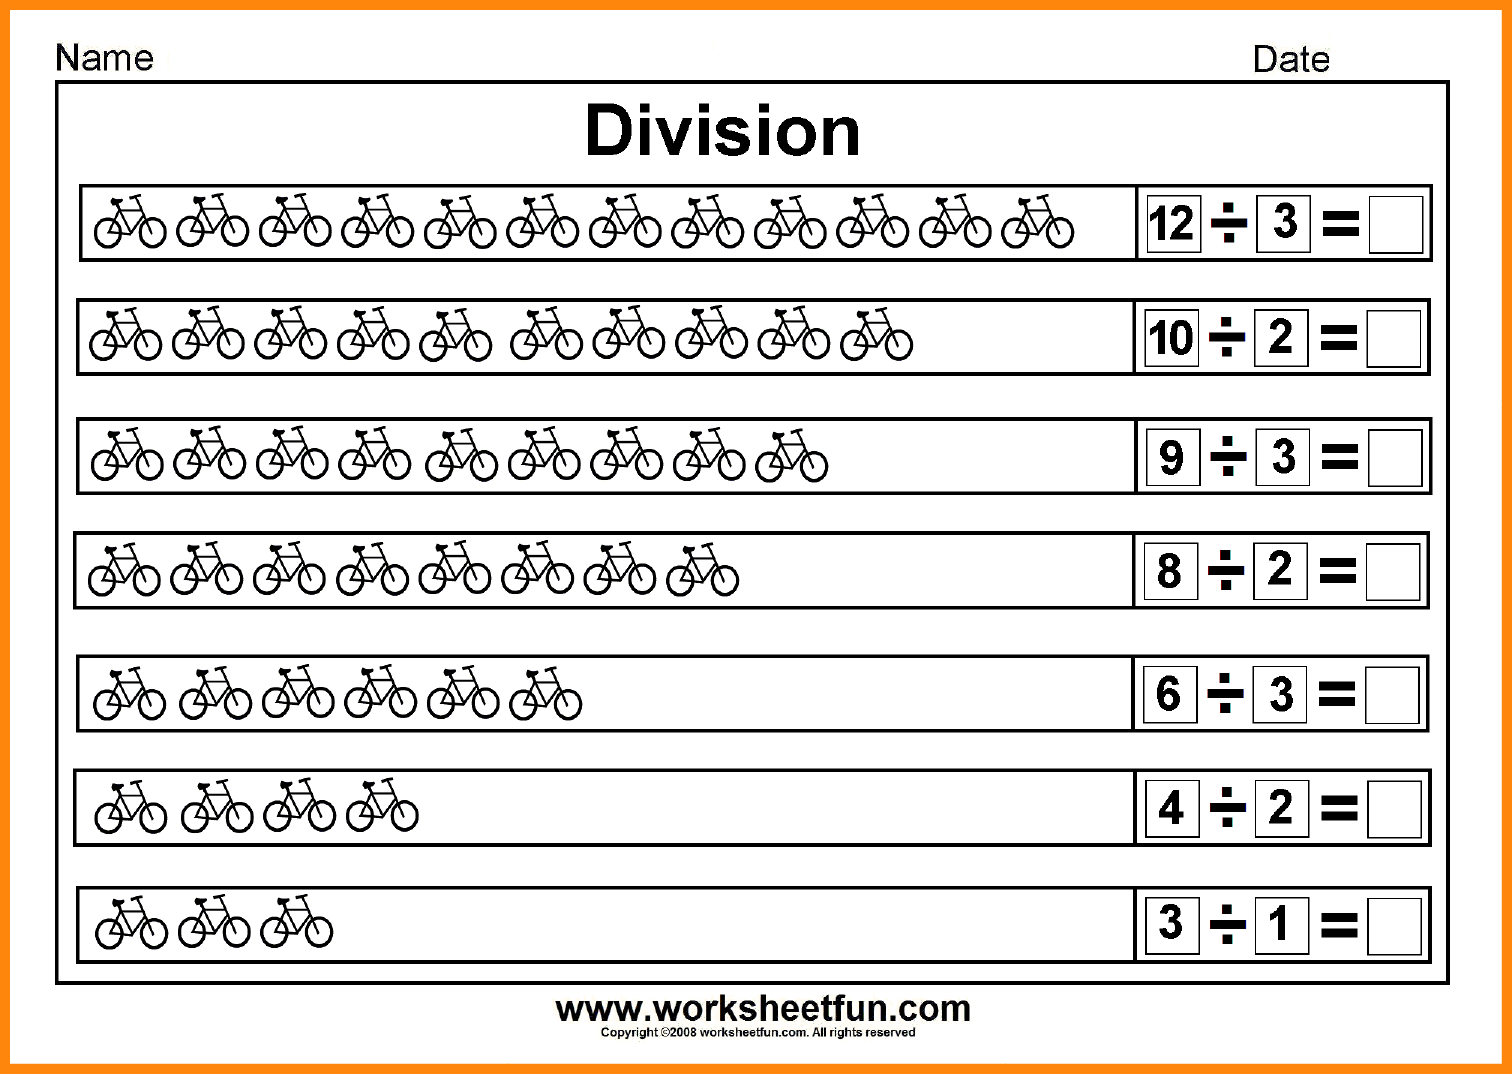 Beginner Division Worksheets Division Free Printable Worksheets 